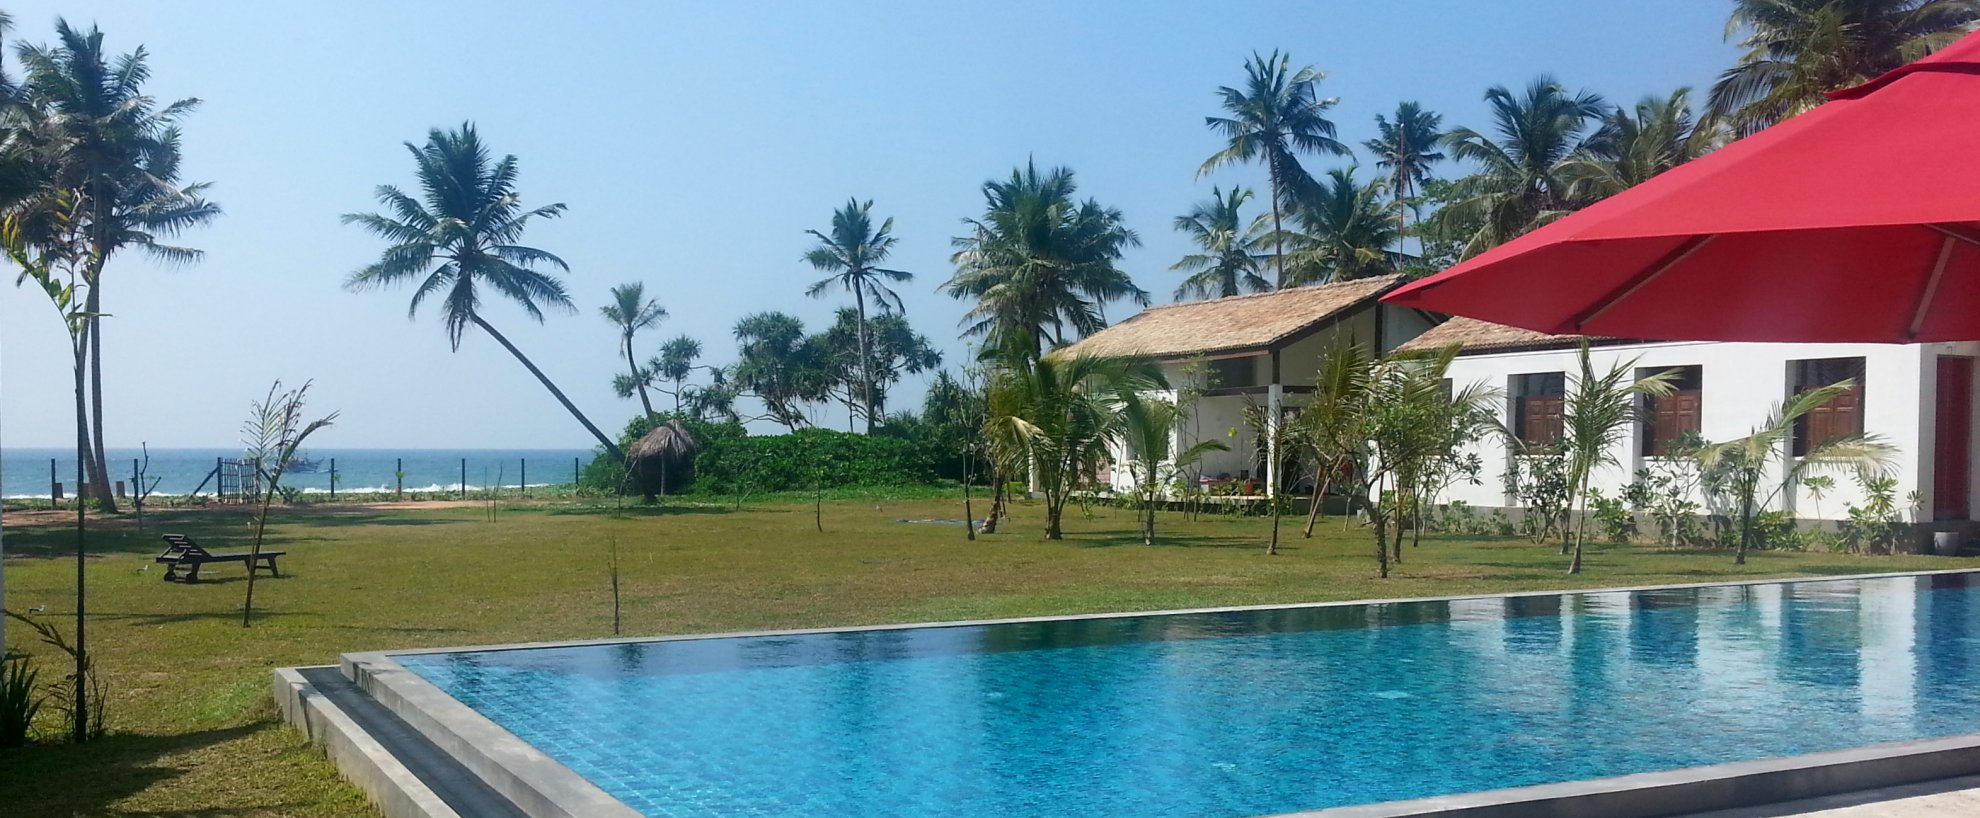 Ayurveda Kuren Reisen Sri Lanka Urlaub ANANDA Ayurveda Resort Anlage Pool Meer